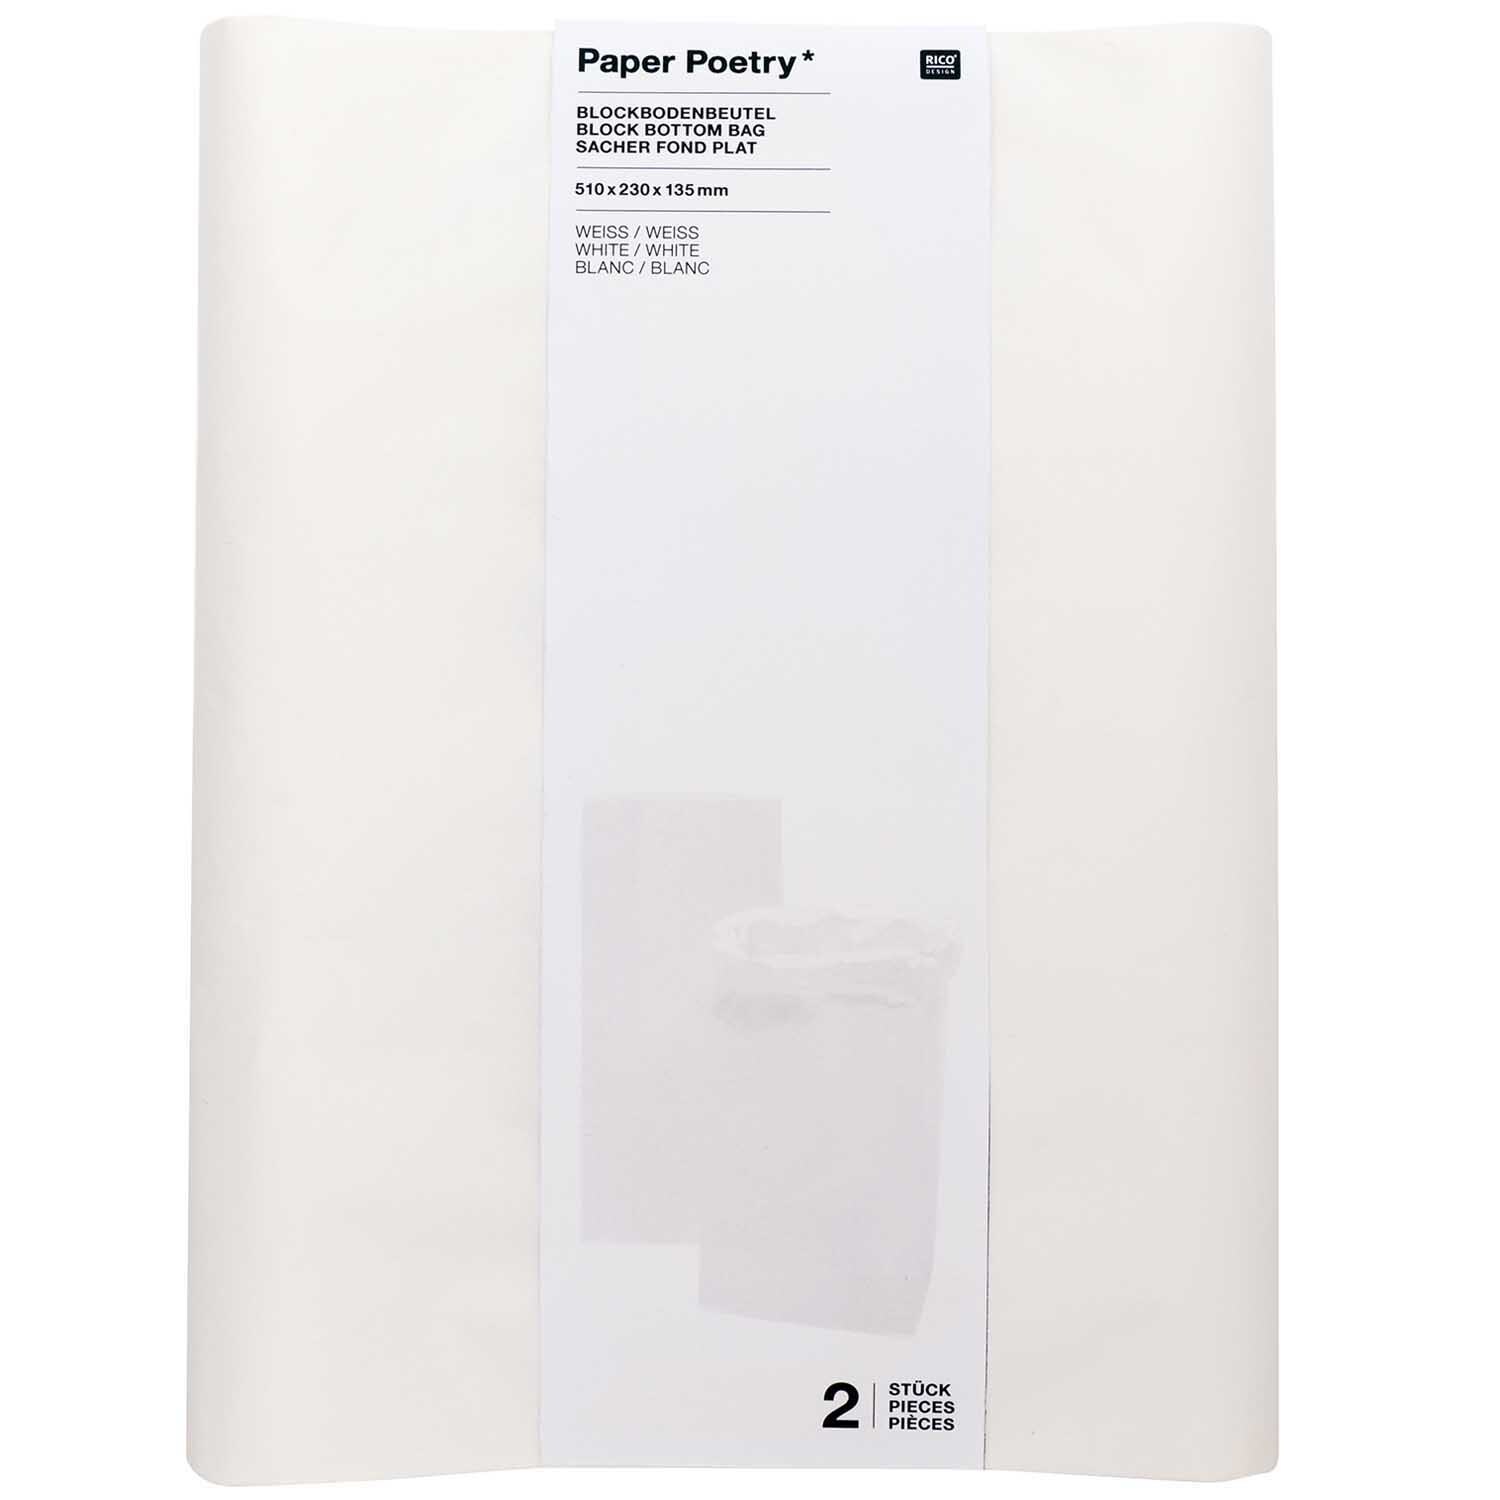 Paper Poetry Maxi-Blockbodenbeutel M weiß 51x23x13,5cm 2 Stück